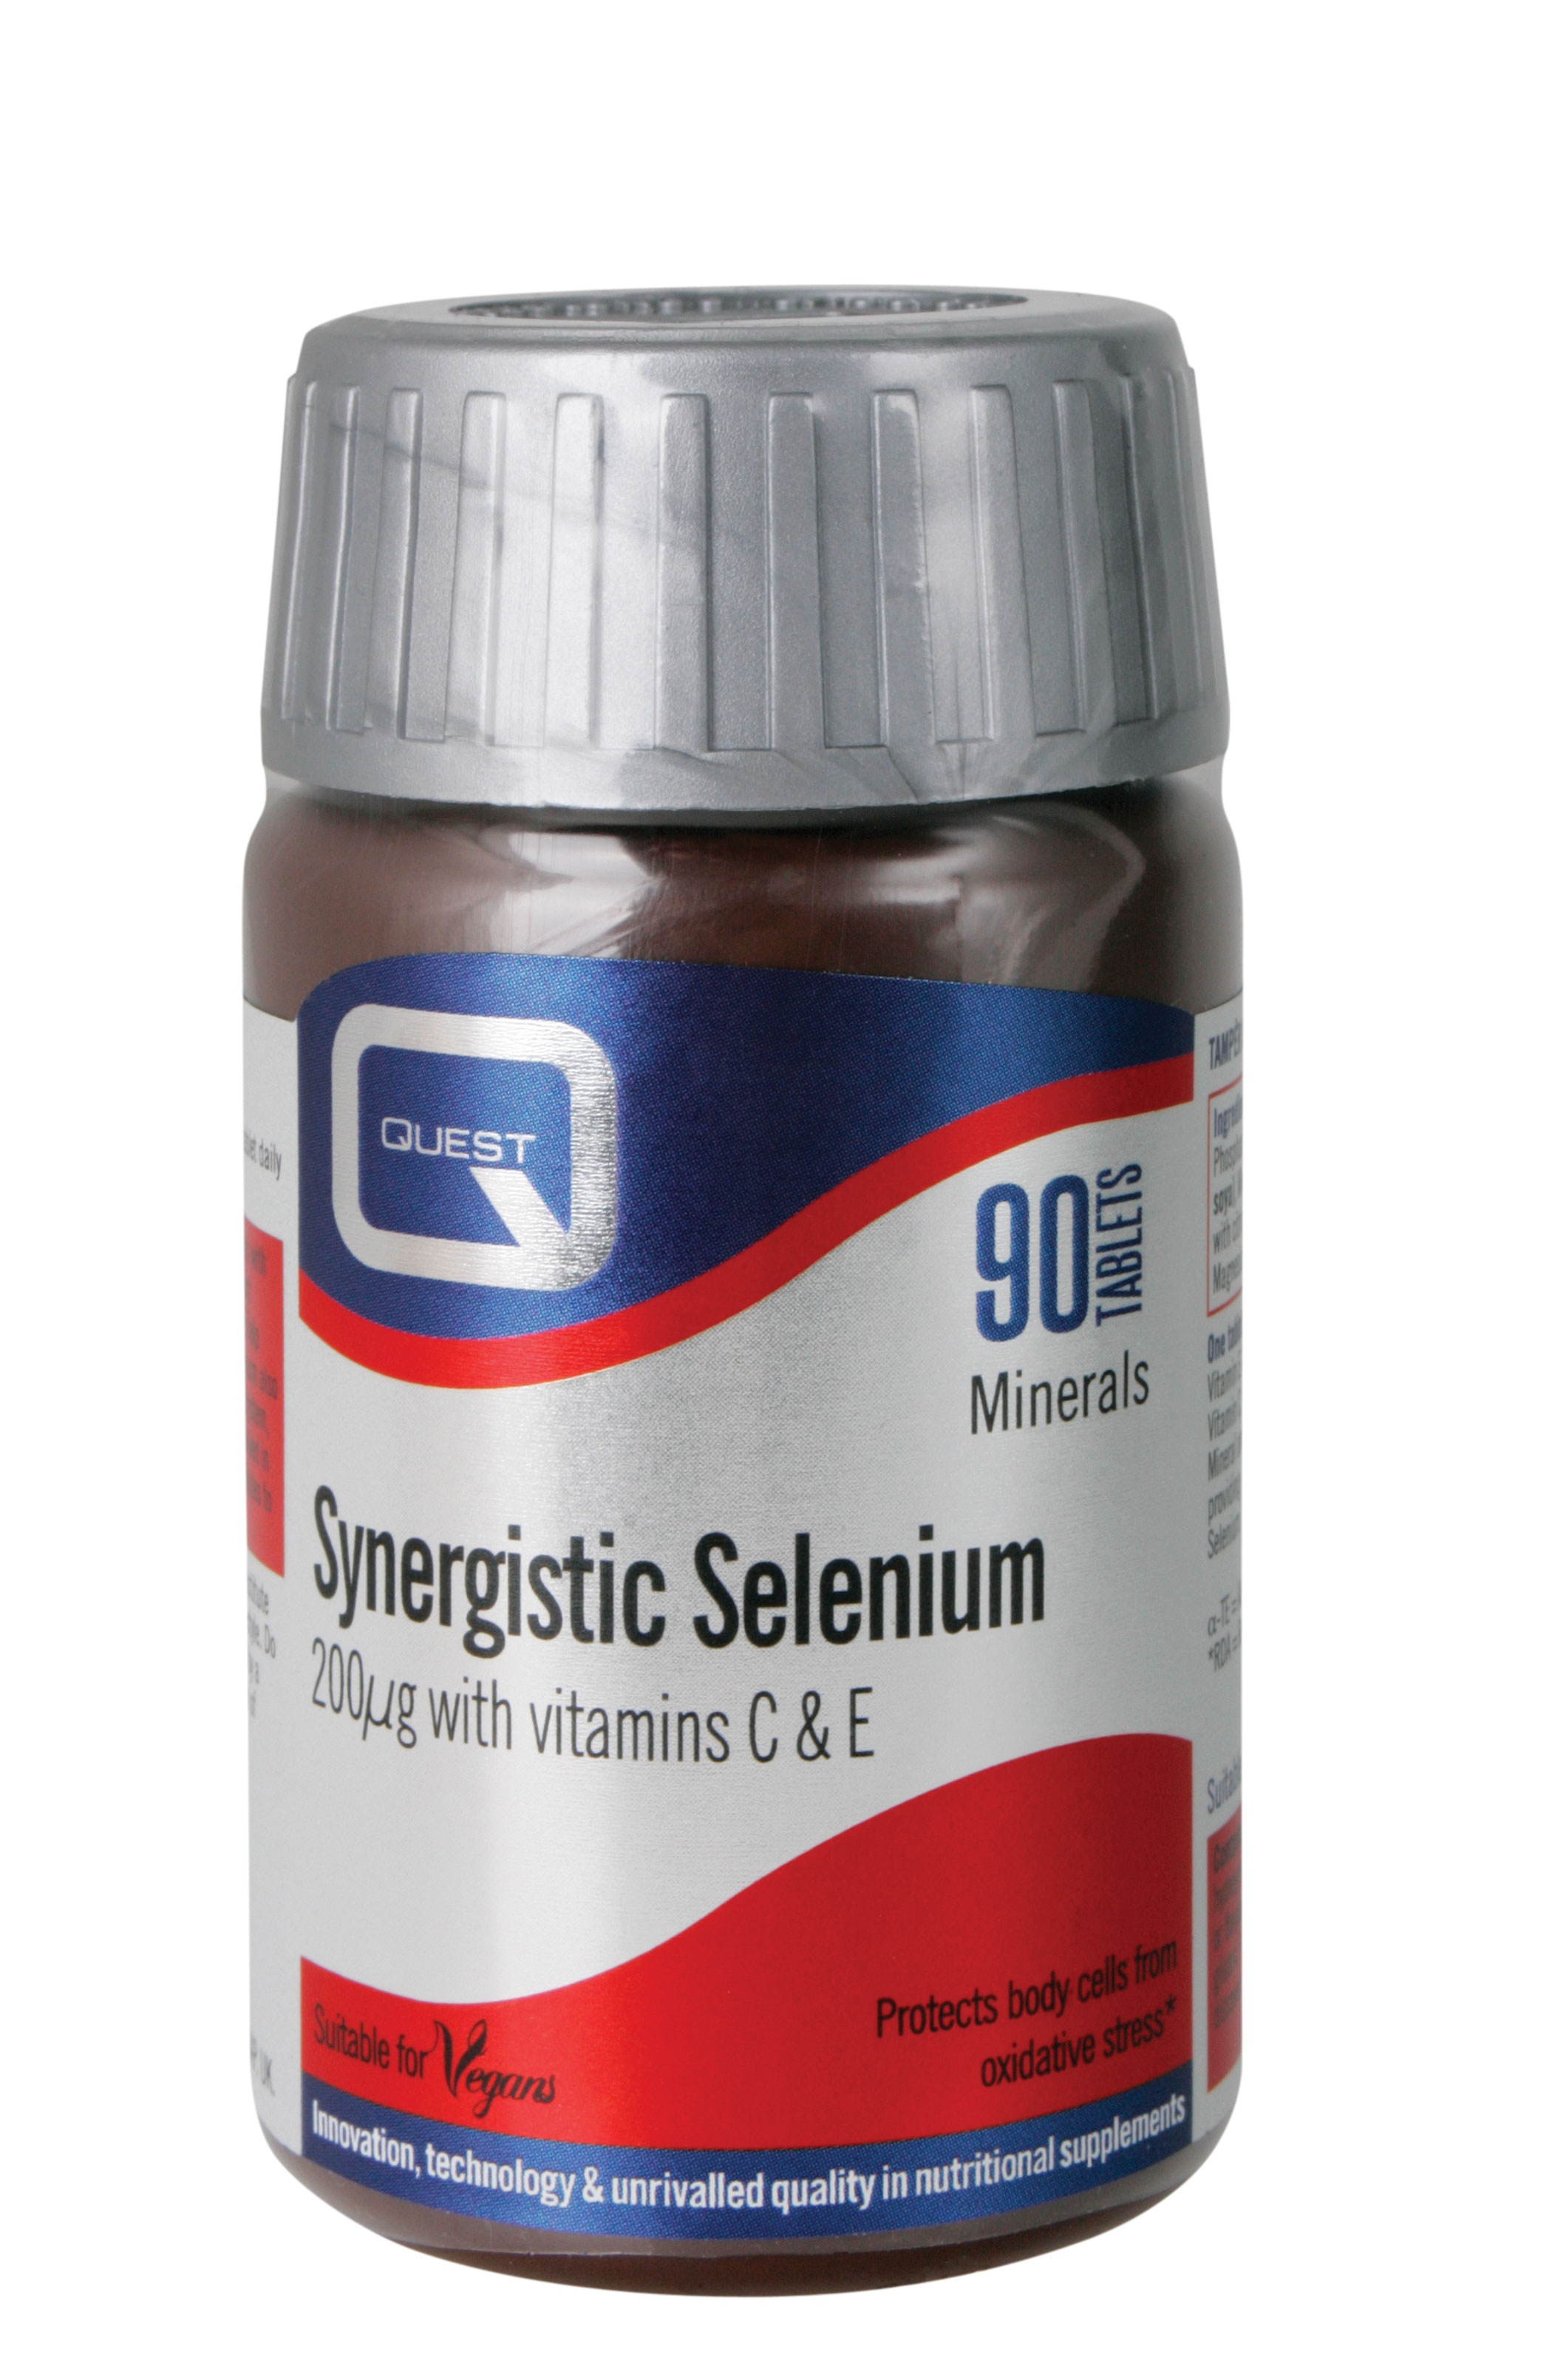 Synergistic Selenium 200ug 90's